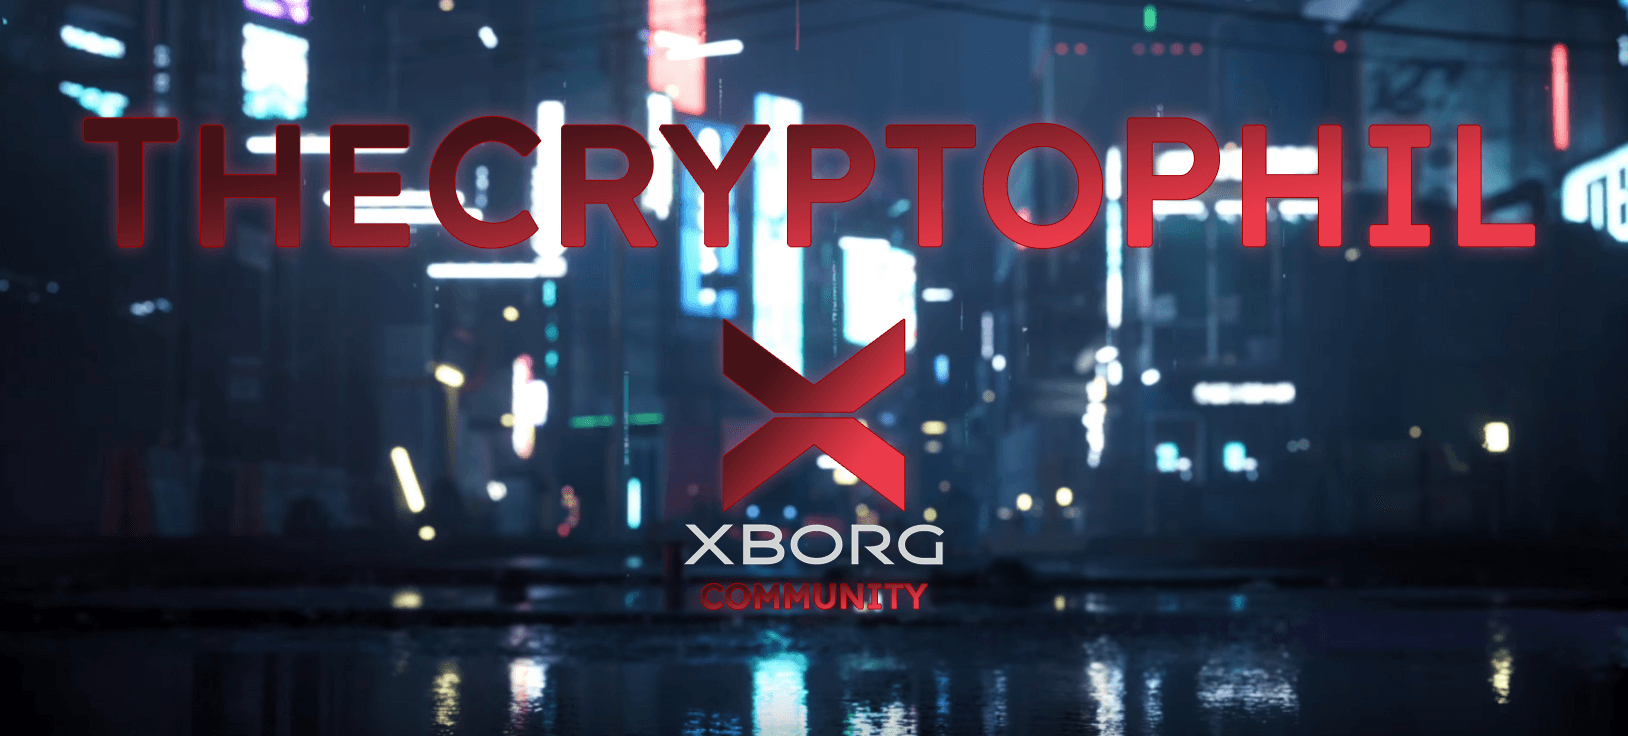 TheCryptoPhil_XBorg banner